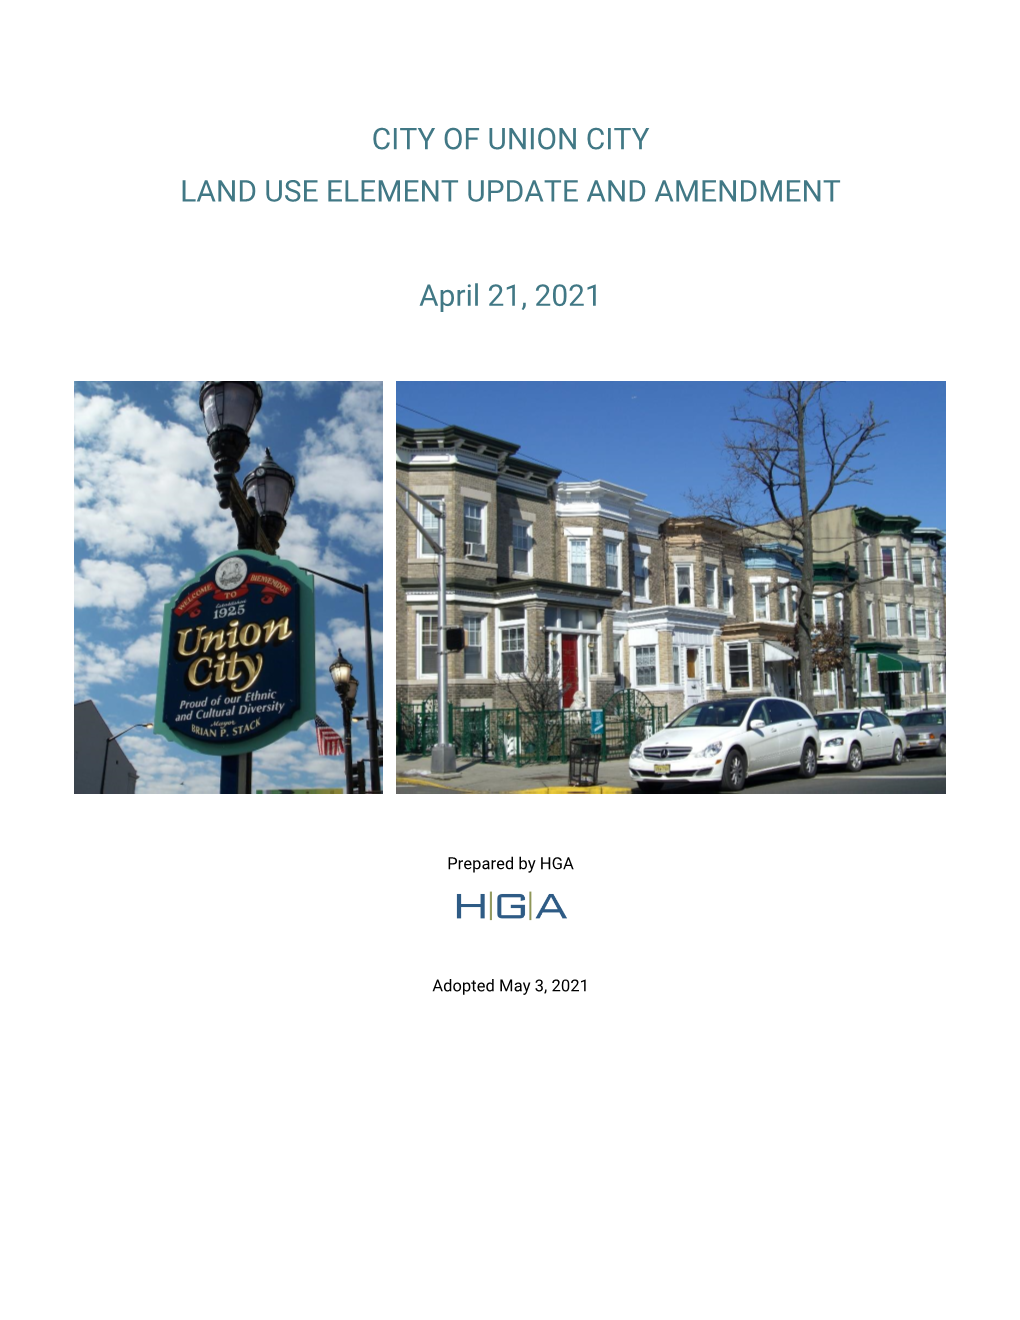 2021 Land Use Element Update & Amendment Adopted